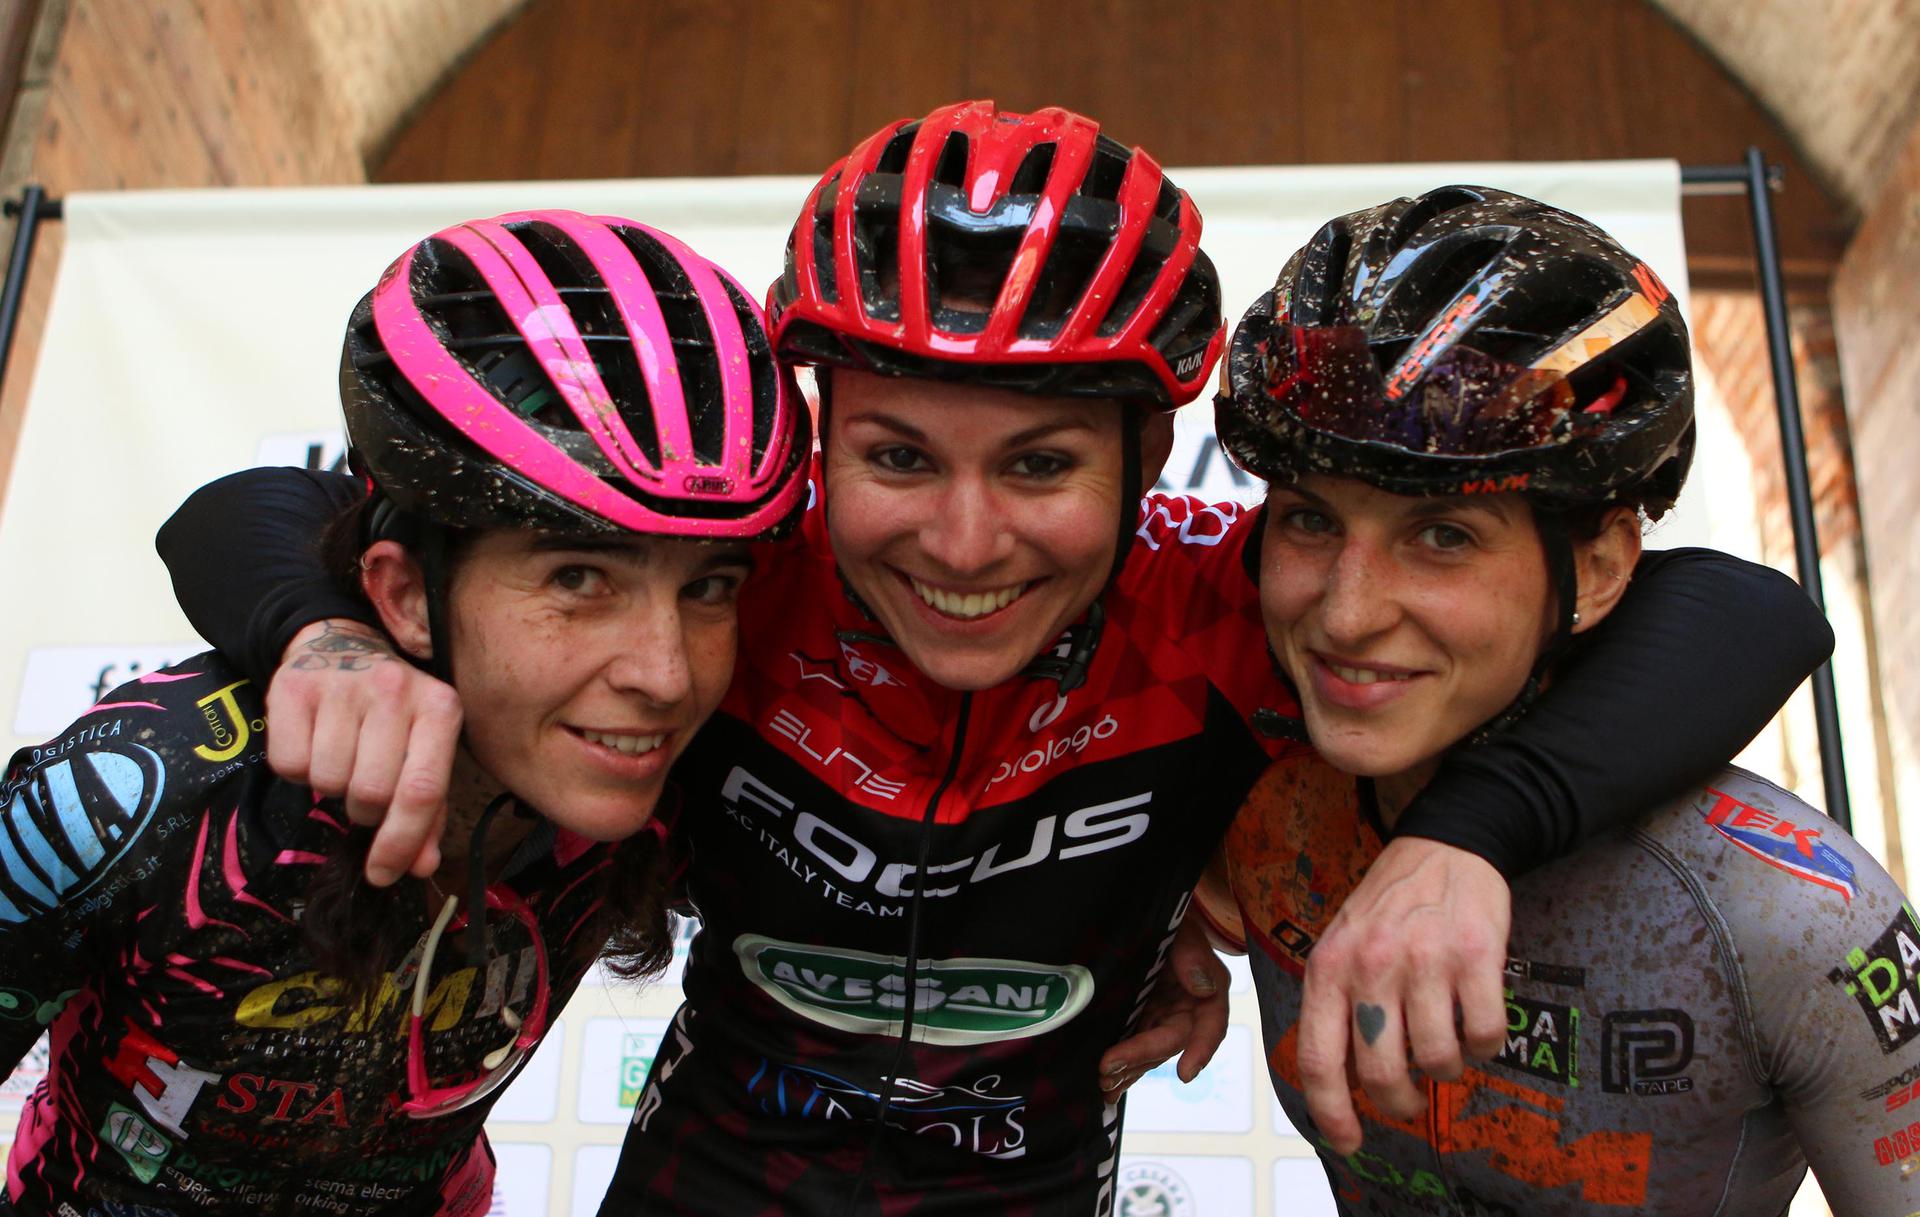  Da sinistra a destra: Simona Mazzucotelli, Mara Fumagalli, Gaia Ravaioli.